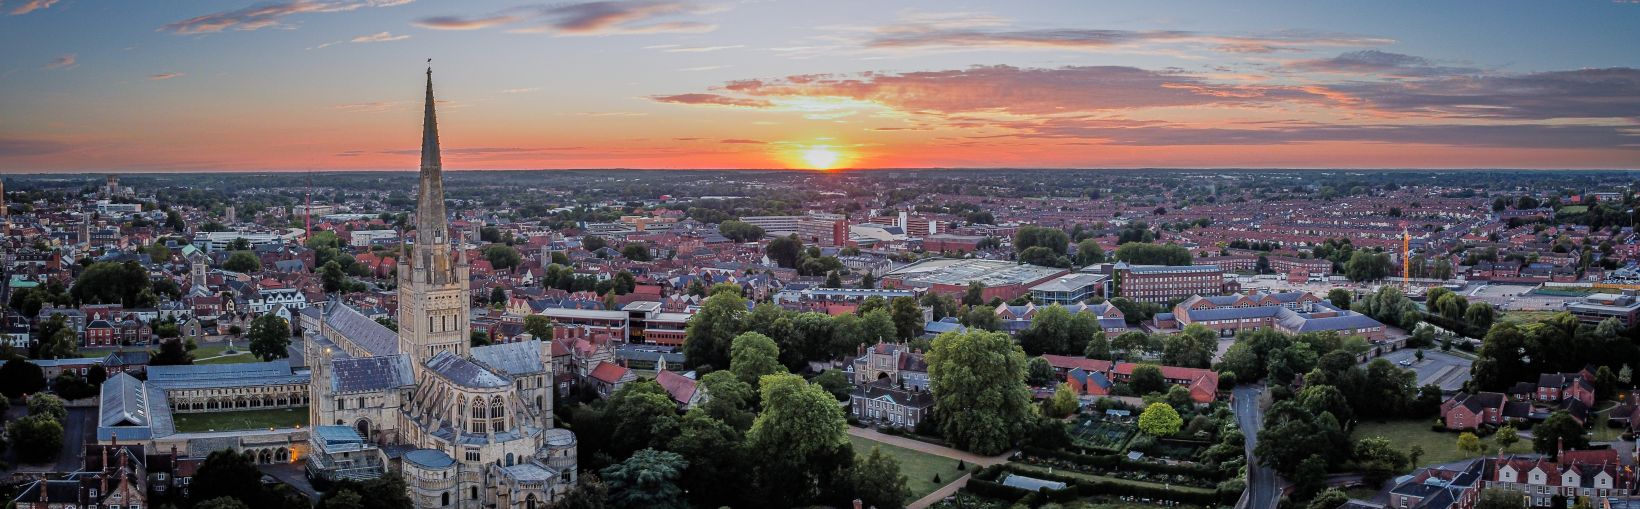 Norwich solnedgang over byens luftfoto